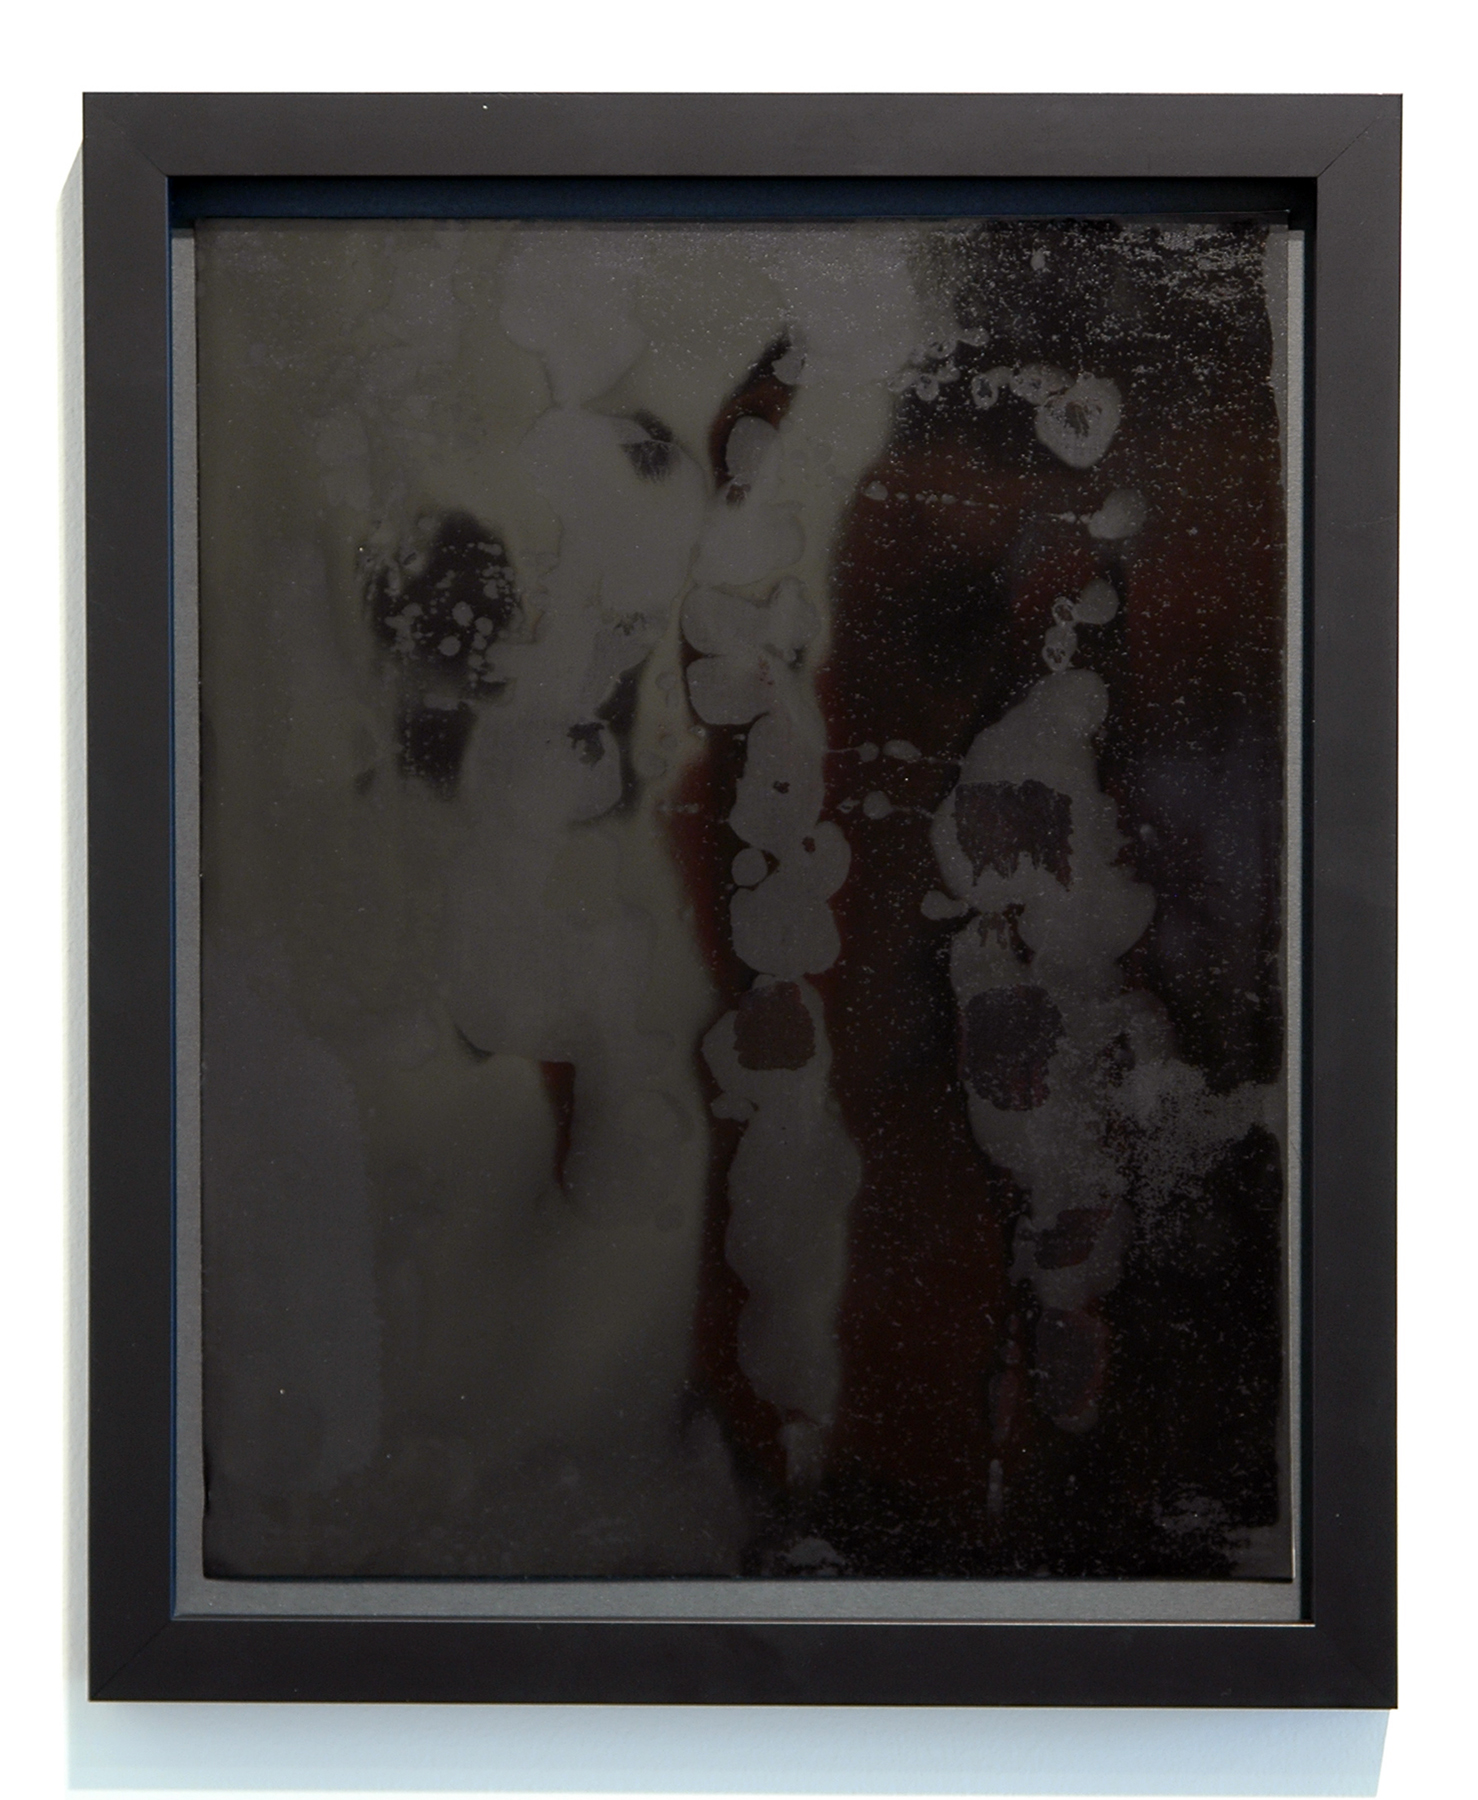   WITH CINDER BLOCKS WE FLATTEN OUR PHOTOGRAPHS  C. Wright Daniel,&nbsp; Untitled (Burnished 3) , unique silver gelatin print, 16.25" x 13.25" (framed), 2013 